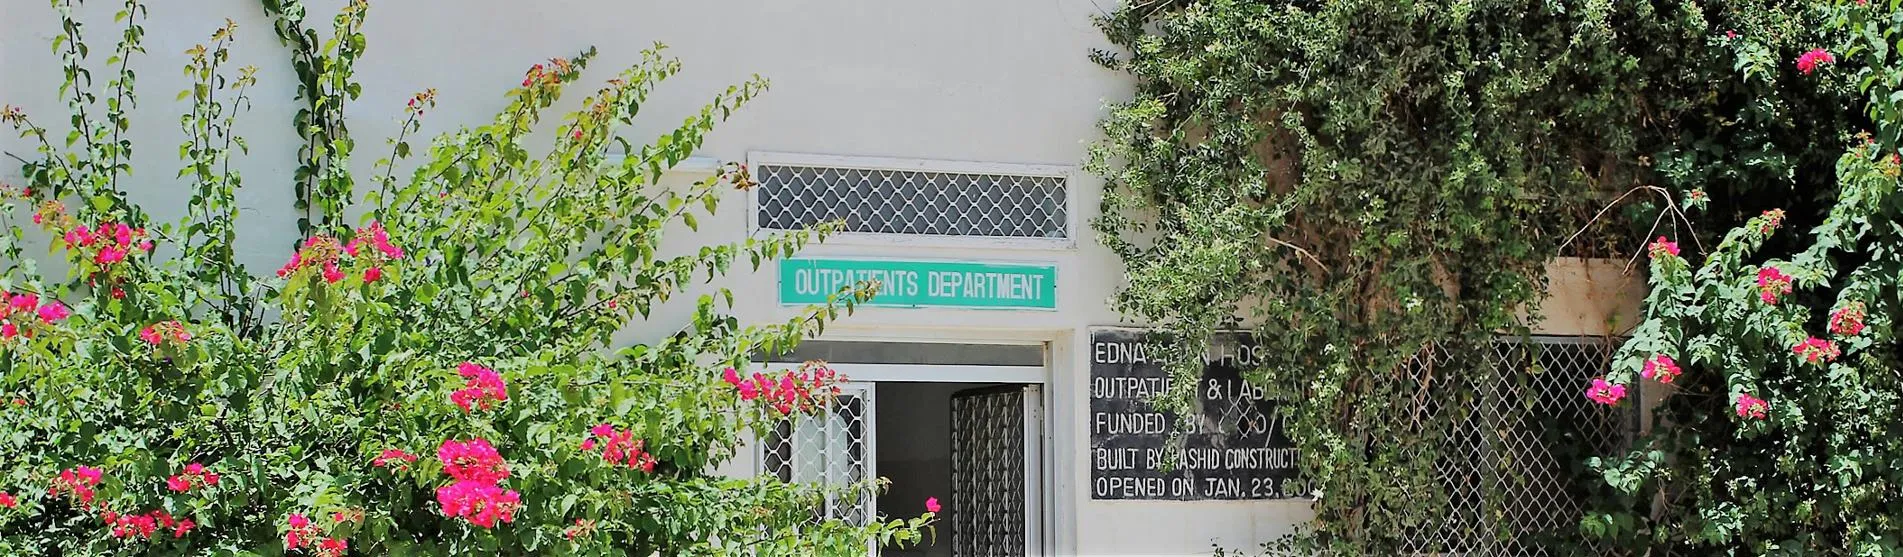 Edna Adan Outpatients Hospital Somaliland